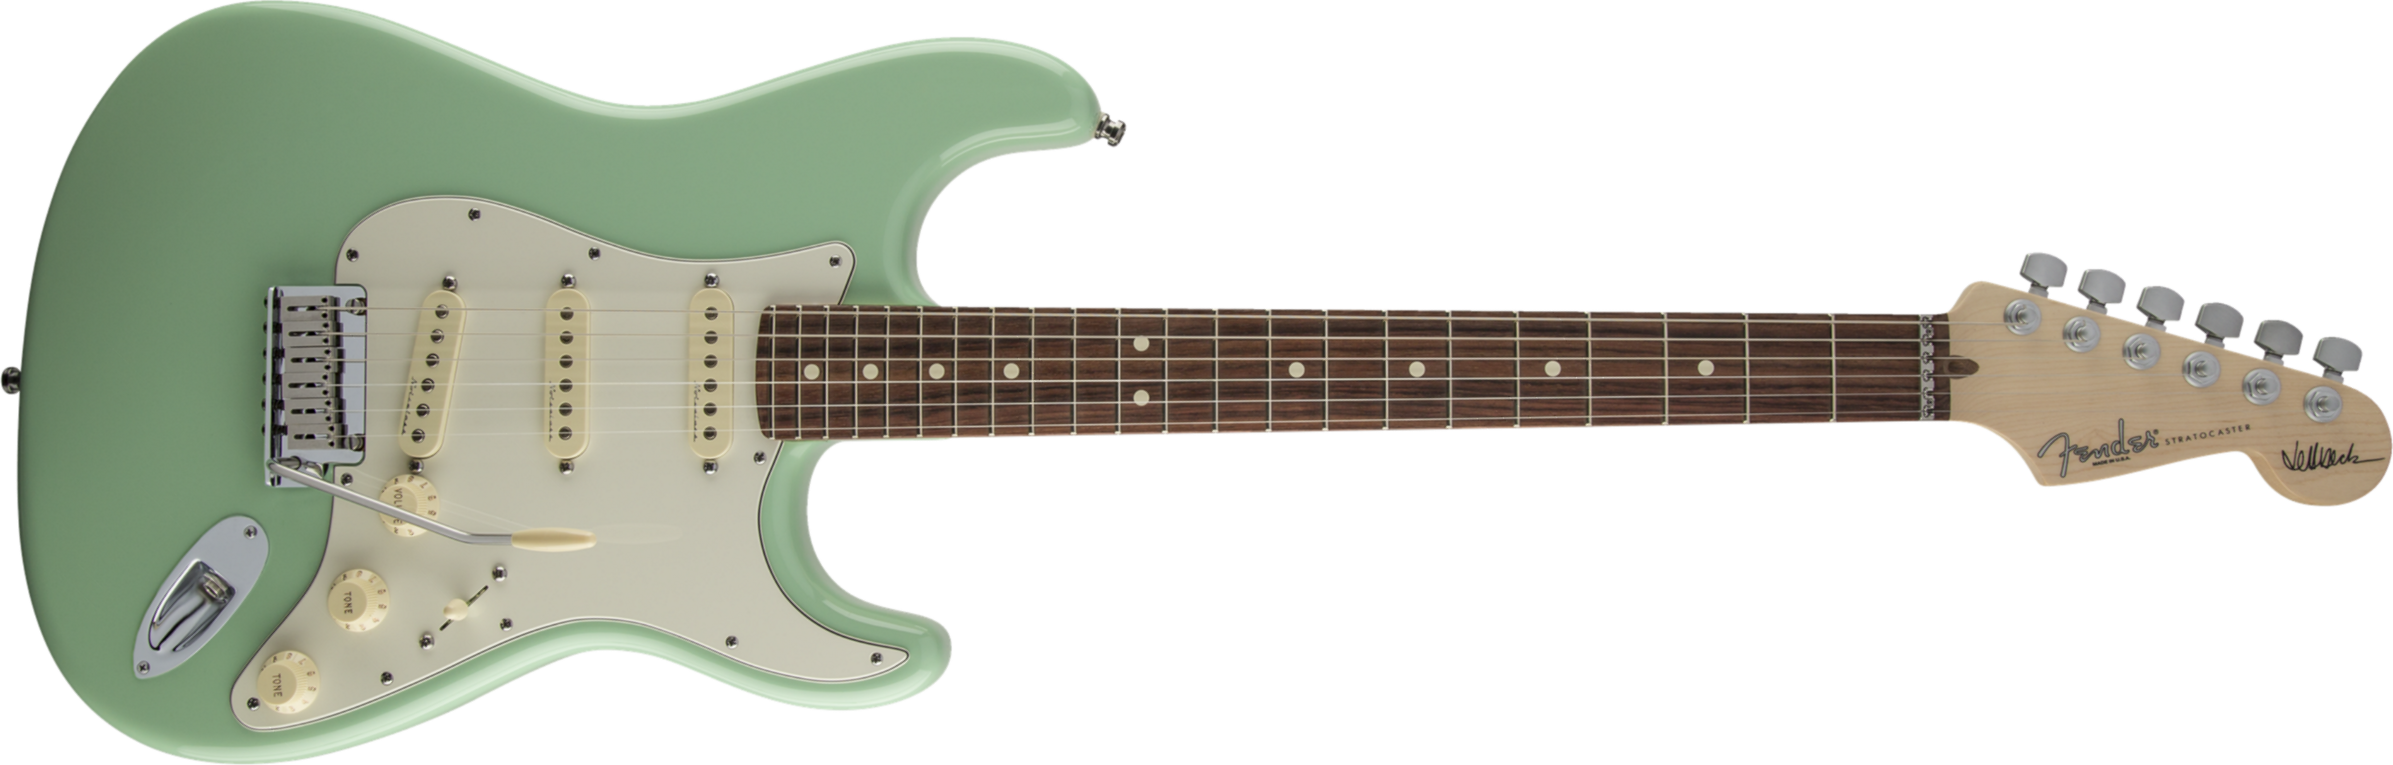 Fender Stratocaster Jeff Beck - Surf Green - Guitarra eléctrica con forma de str. - Main picture